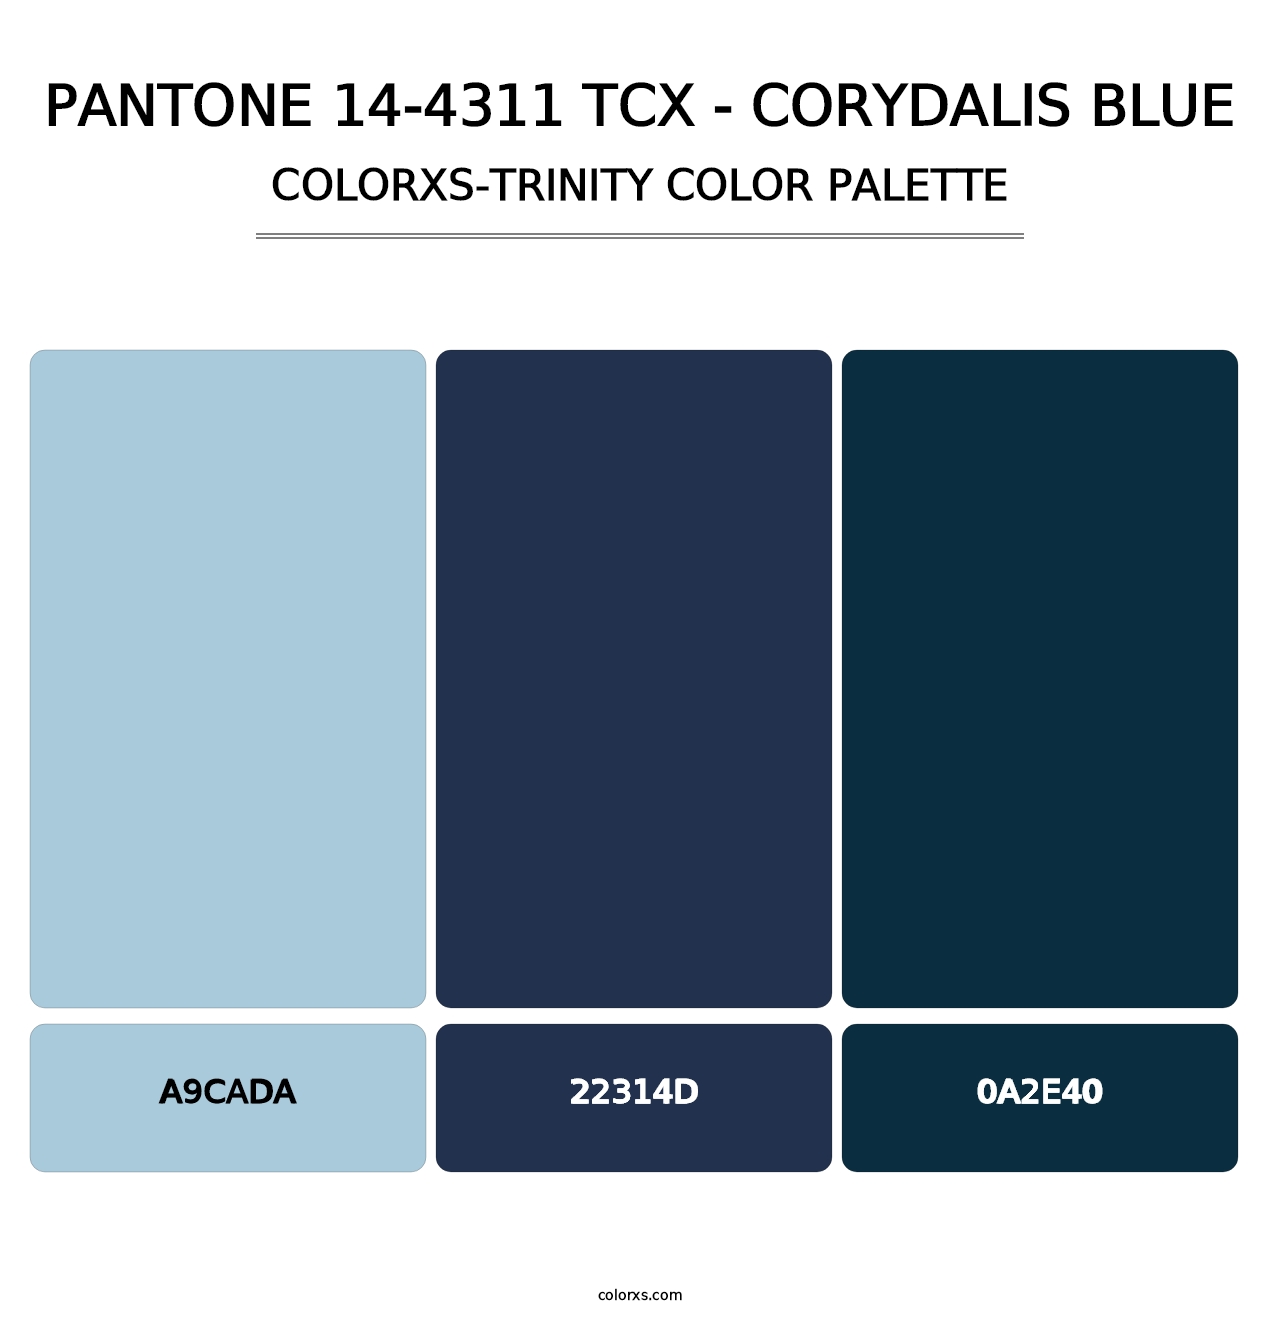 PANTONE 14-4311 TCX - Corydalis Blue - Colorxs Trinity Palette